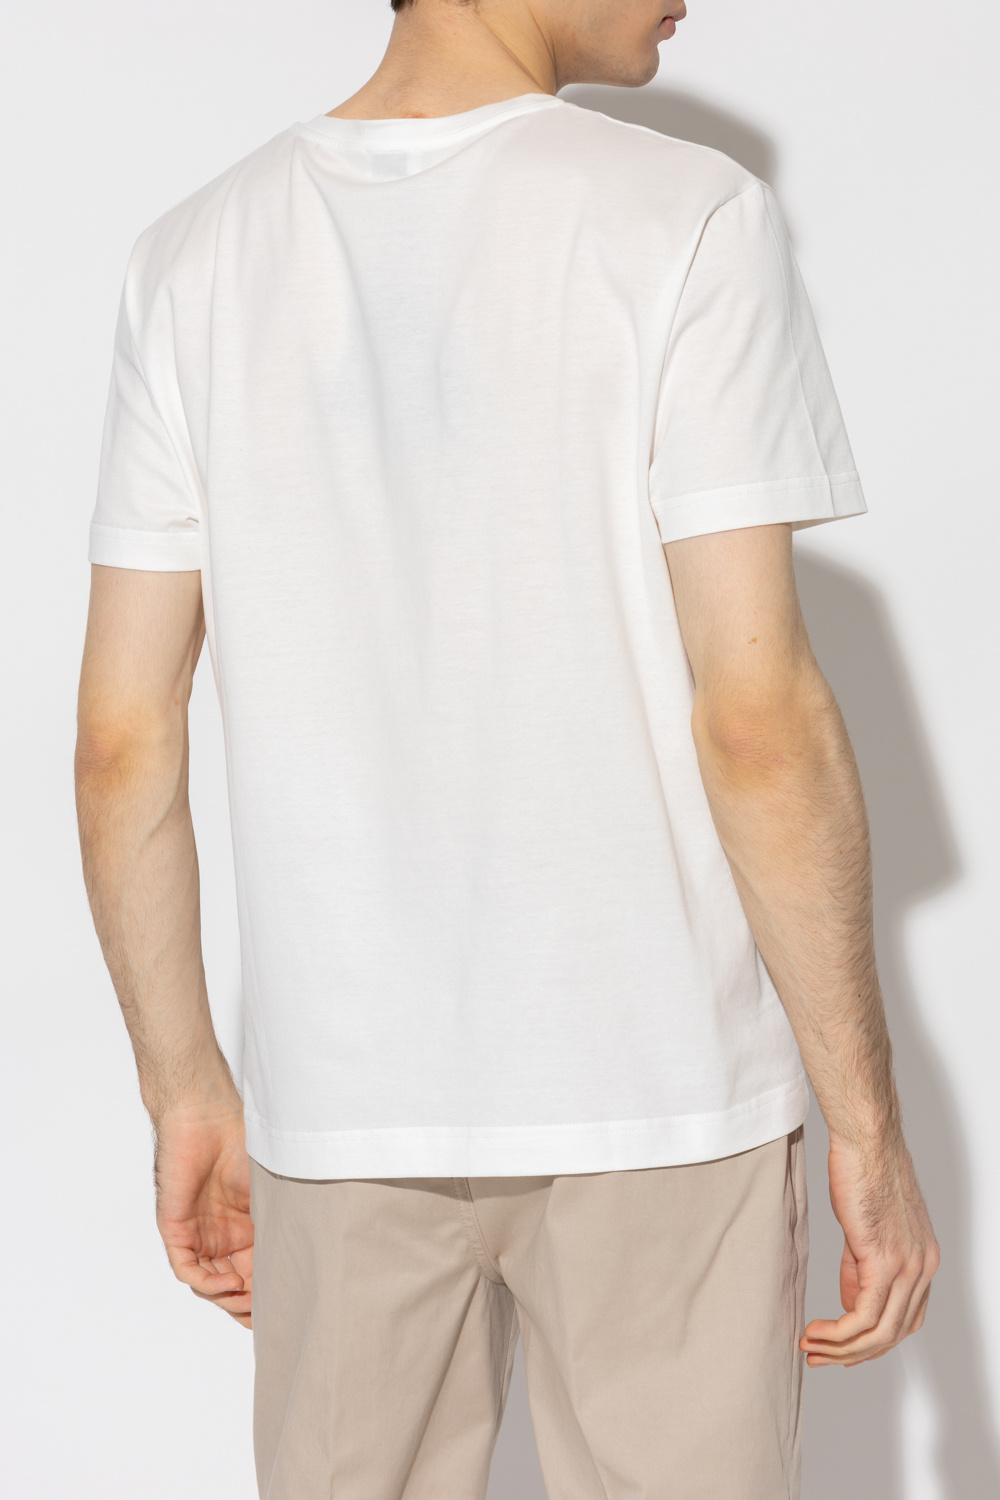 usb White - with shirt Turkey shirts men - IetpShops Etro wallets T clothing - key-chains logo polo-shirts